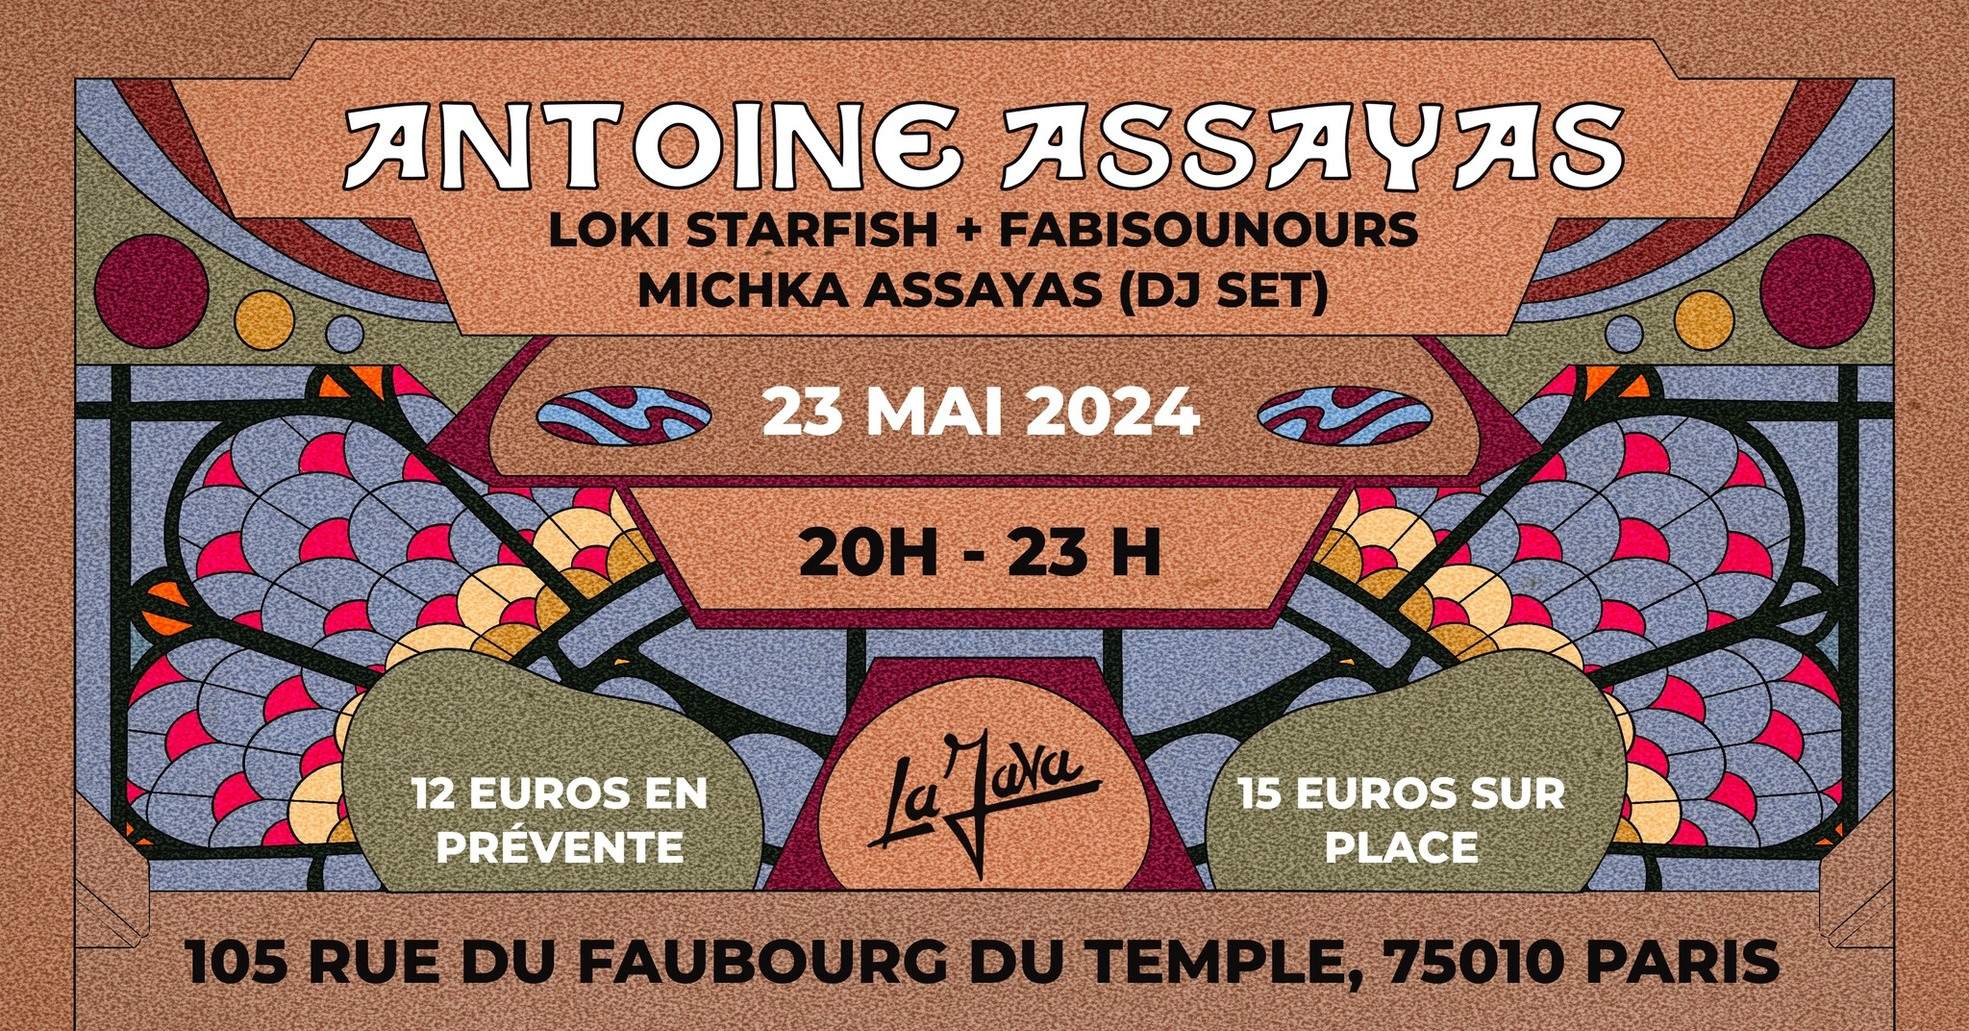 La Java! Antoine Assayas / Michka Assayas (Dj set) Loki Starfish & Fabisounours - Página frontal